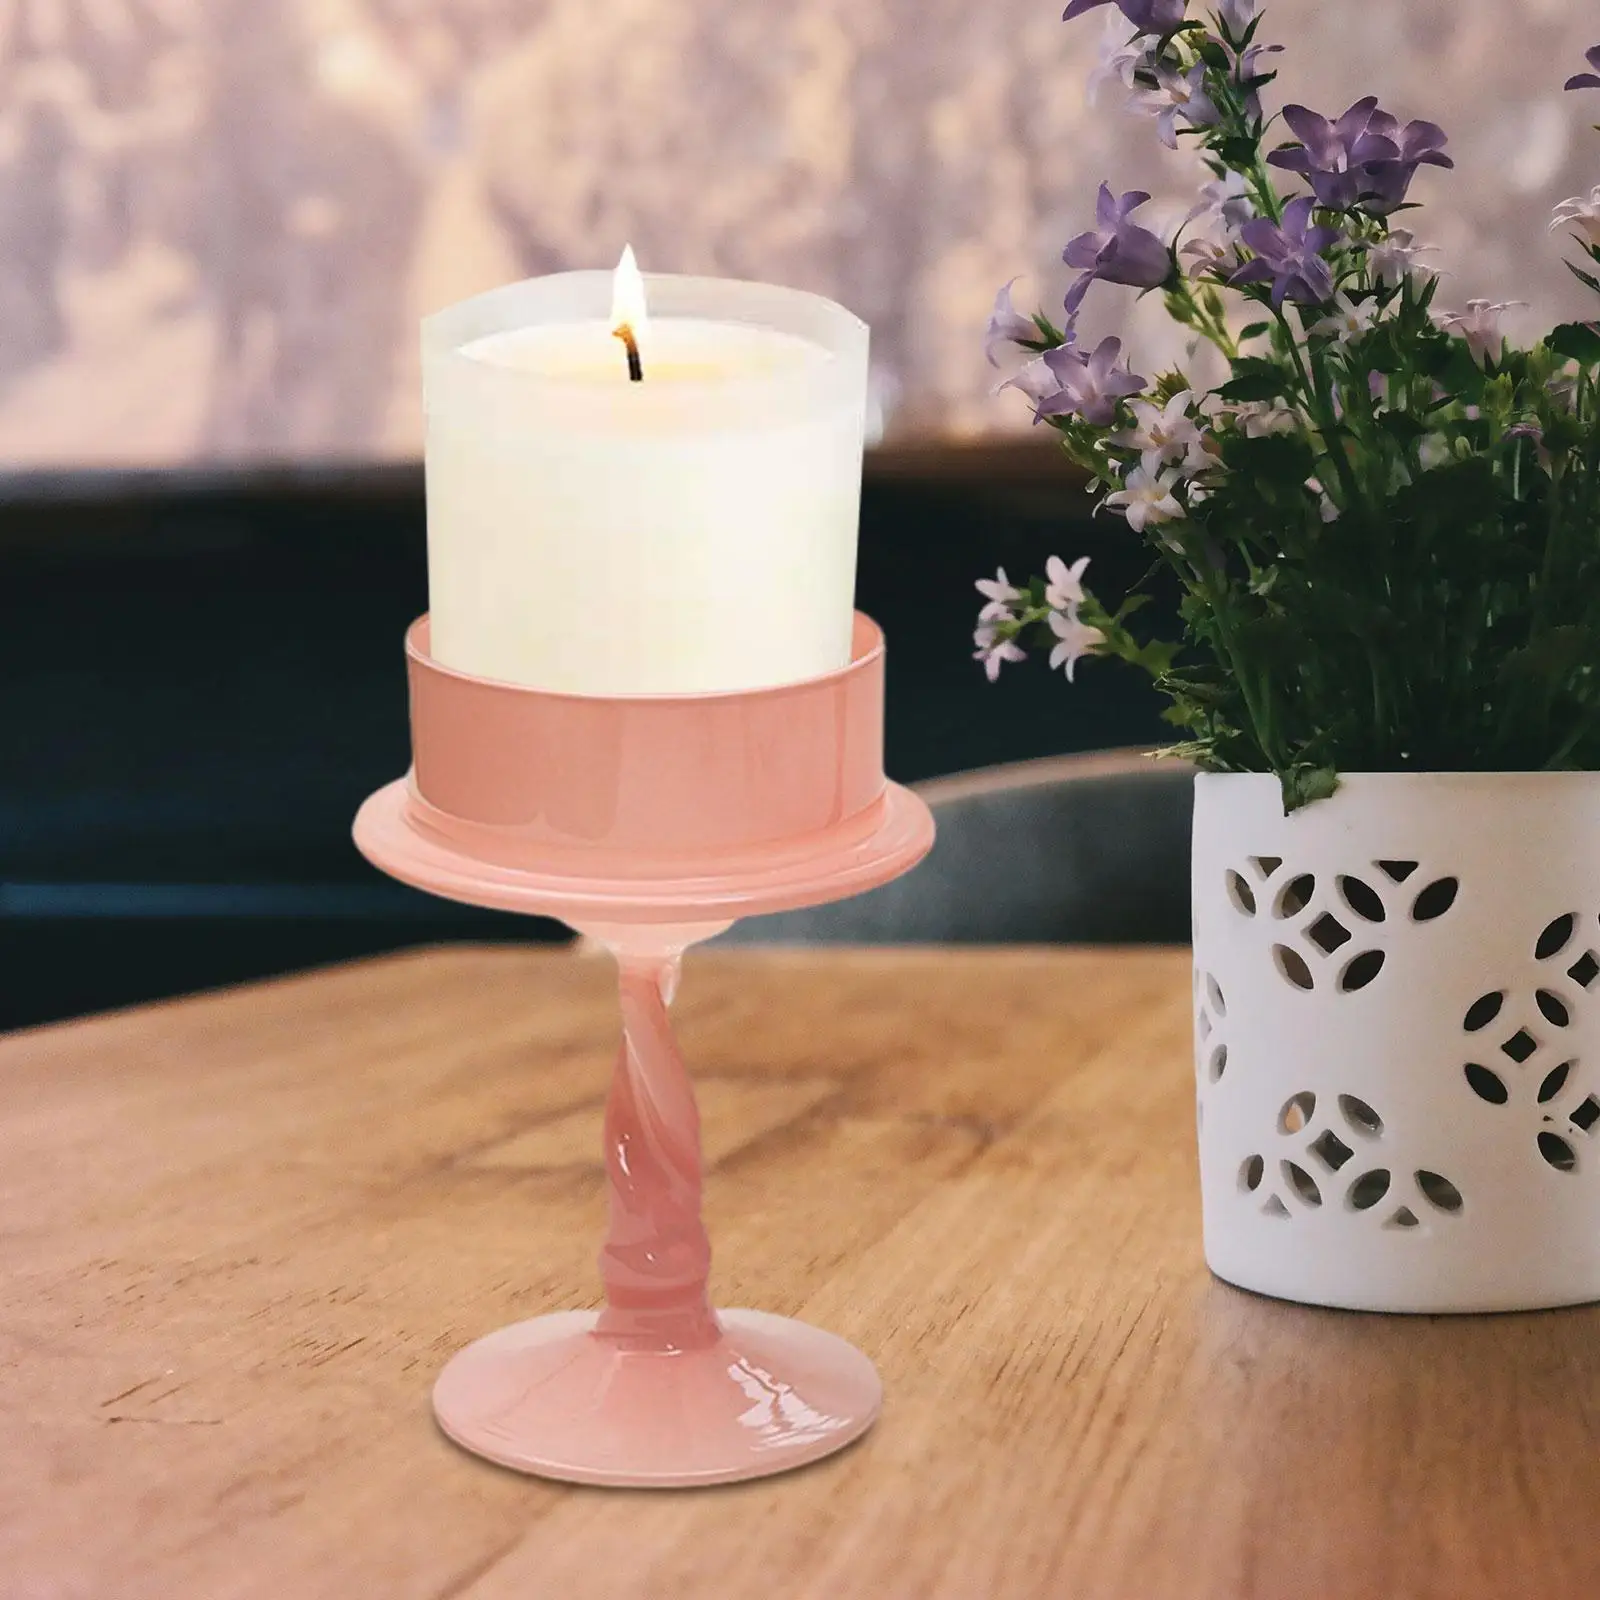 Candleholder Elegant Design Simple Glass Candlestick Holder for Wedding Centerpieces Living Room Thanksgiving Dining Room Decor